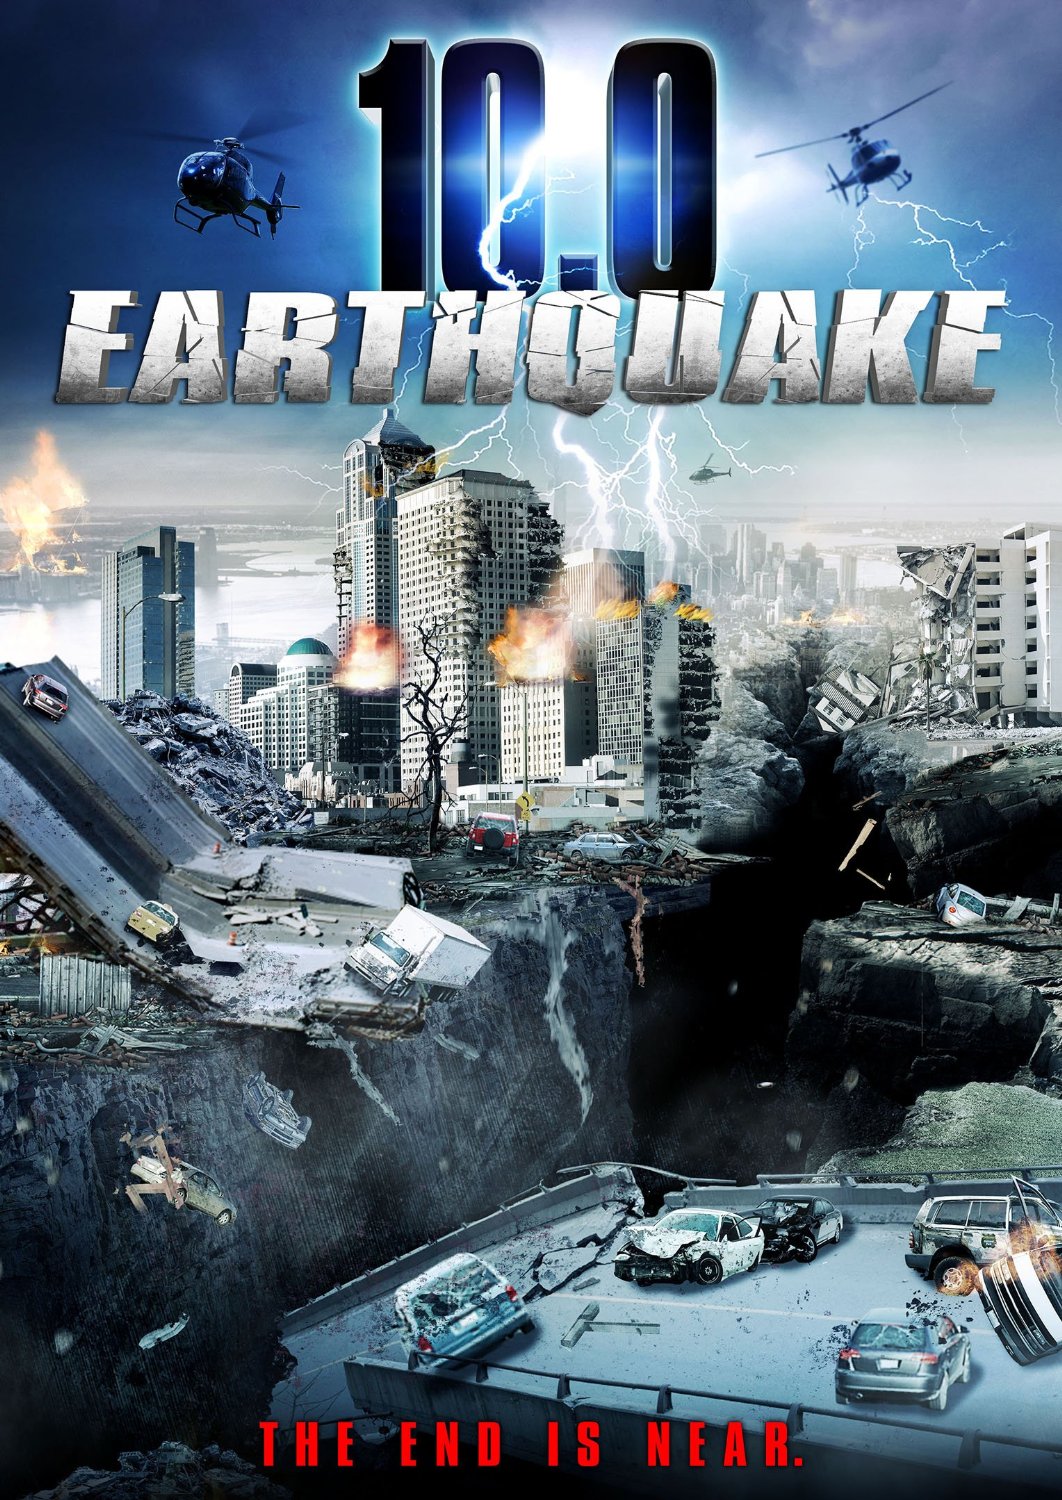 2014 10.0 Earthquake